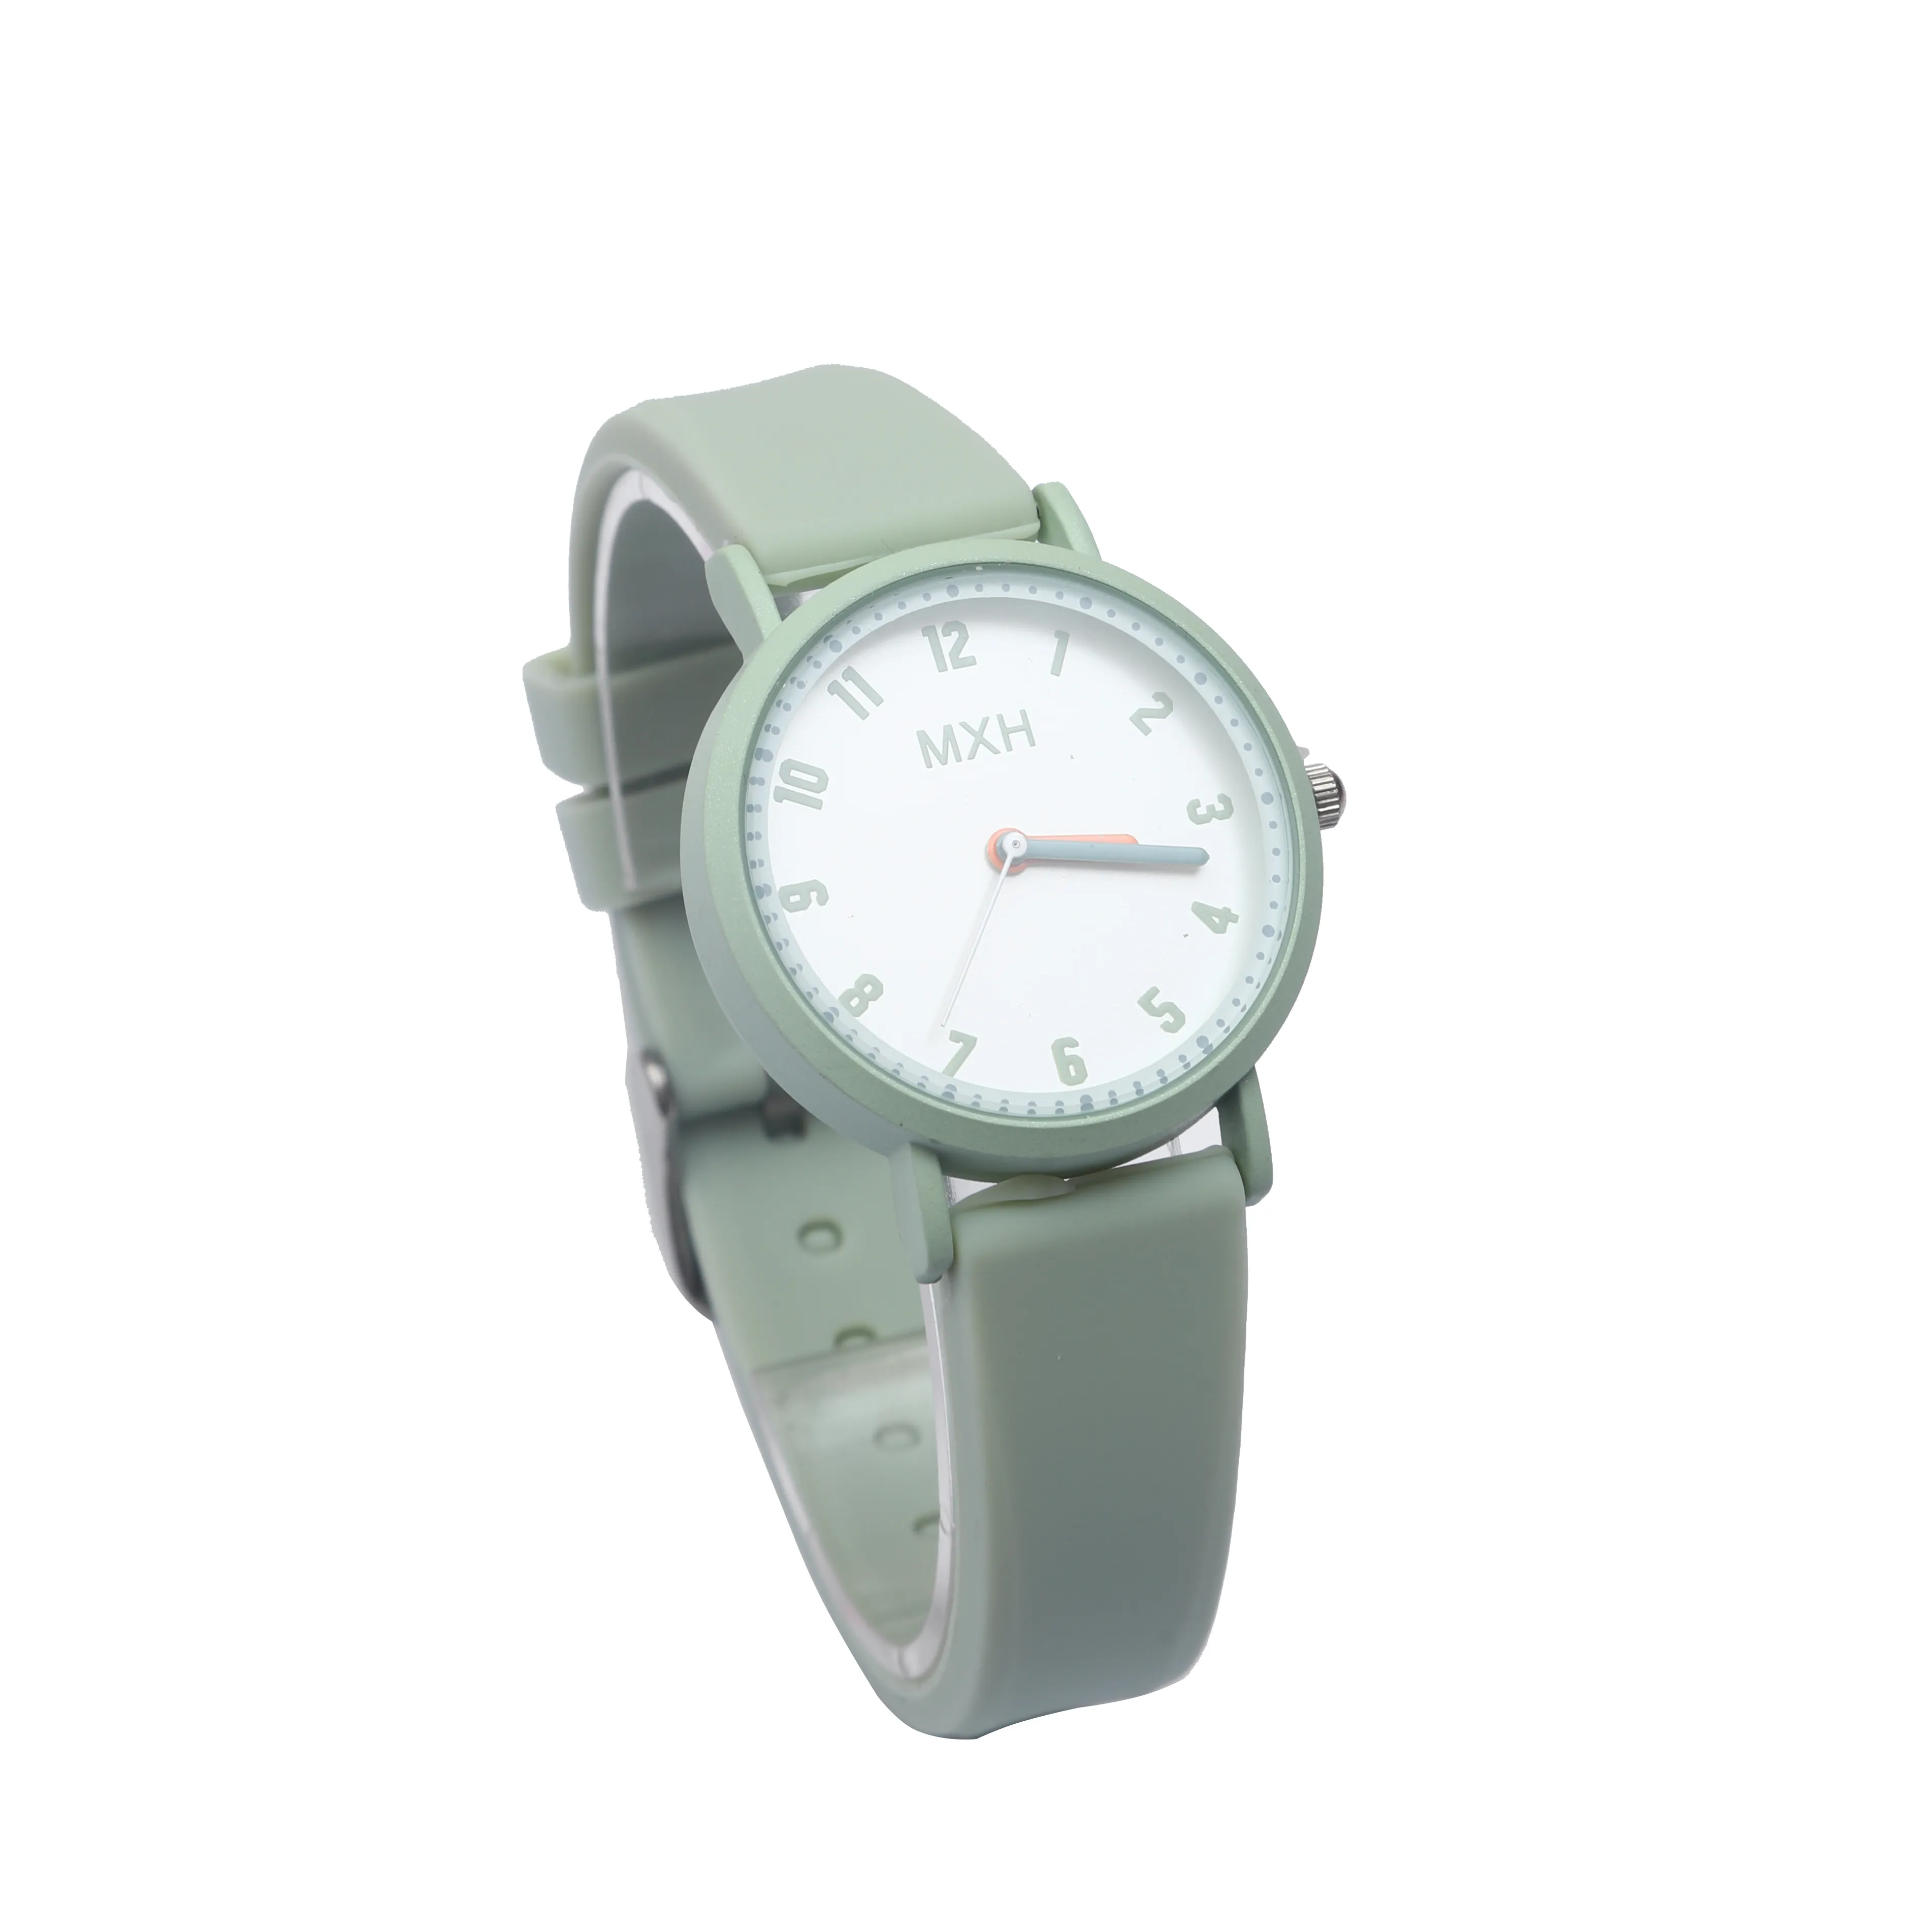 Jam tangan gelang Quartz modis baru tali silikon plastik warna-warni gaya bisnis klasik kartun-harga grosir